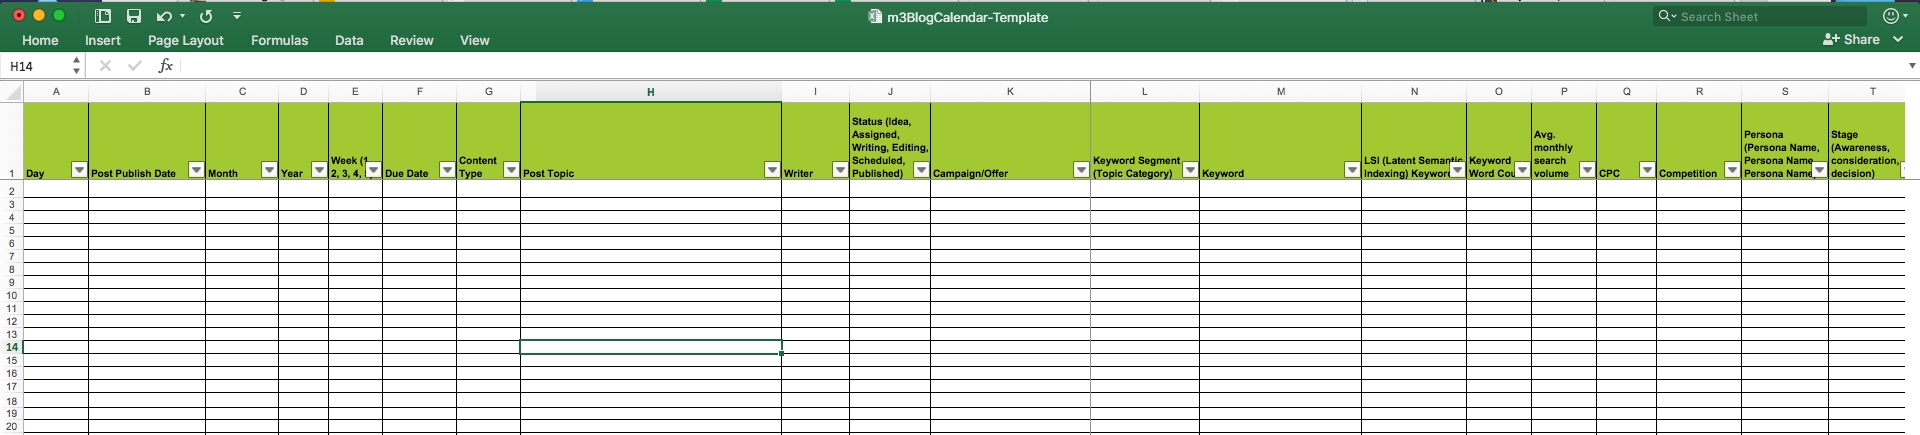 Editorial Calendar Templates For Content Marketing: The Content Calendar Template Xls